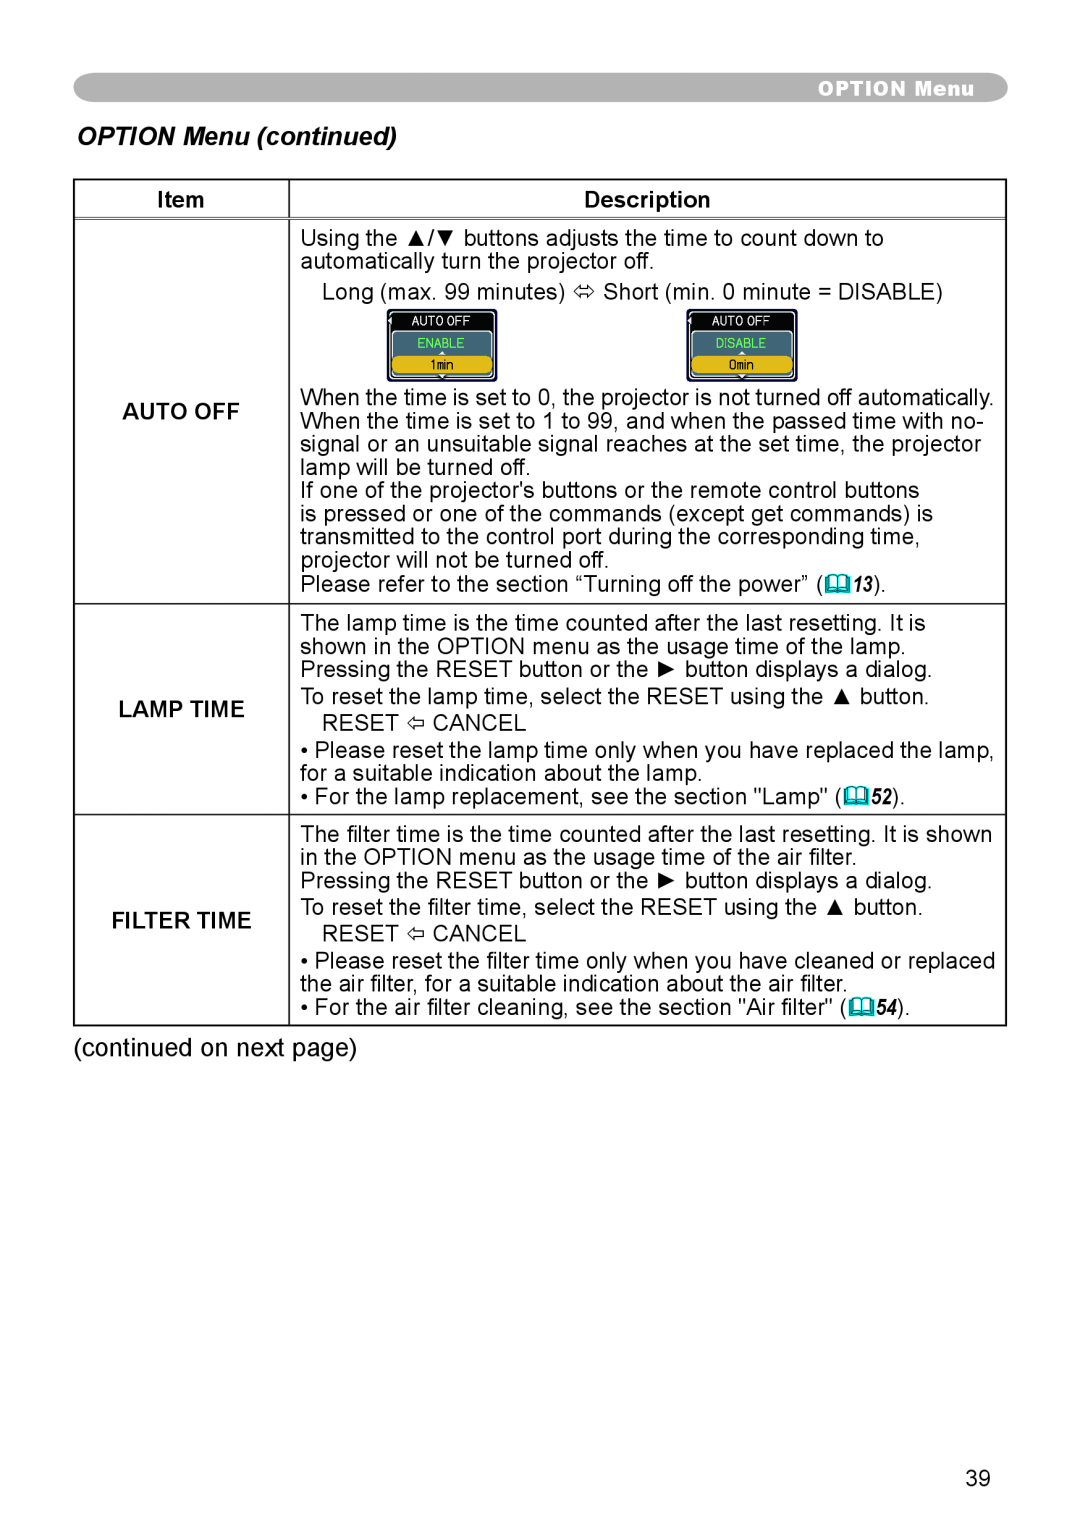 Dukane 8783 user manual OPTION Menu continued, Description, Auto Off, Lamp Time, Filter Time 